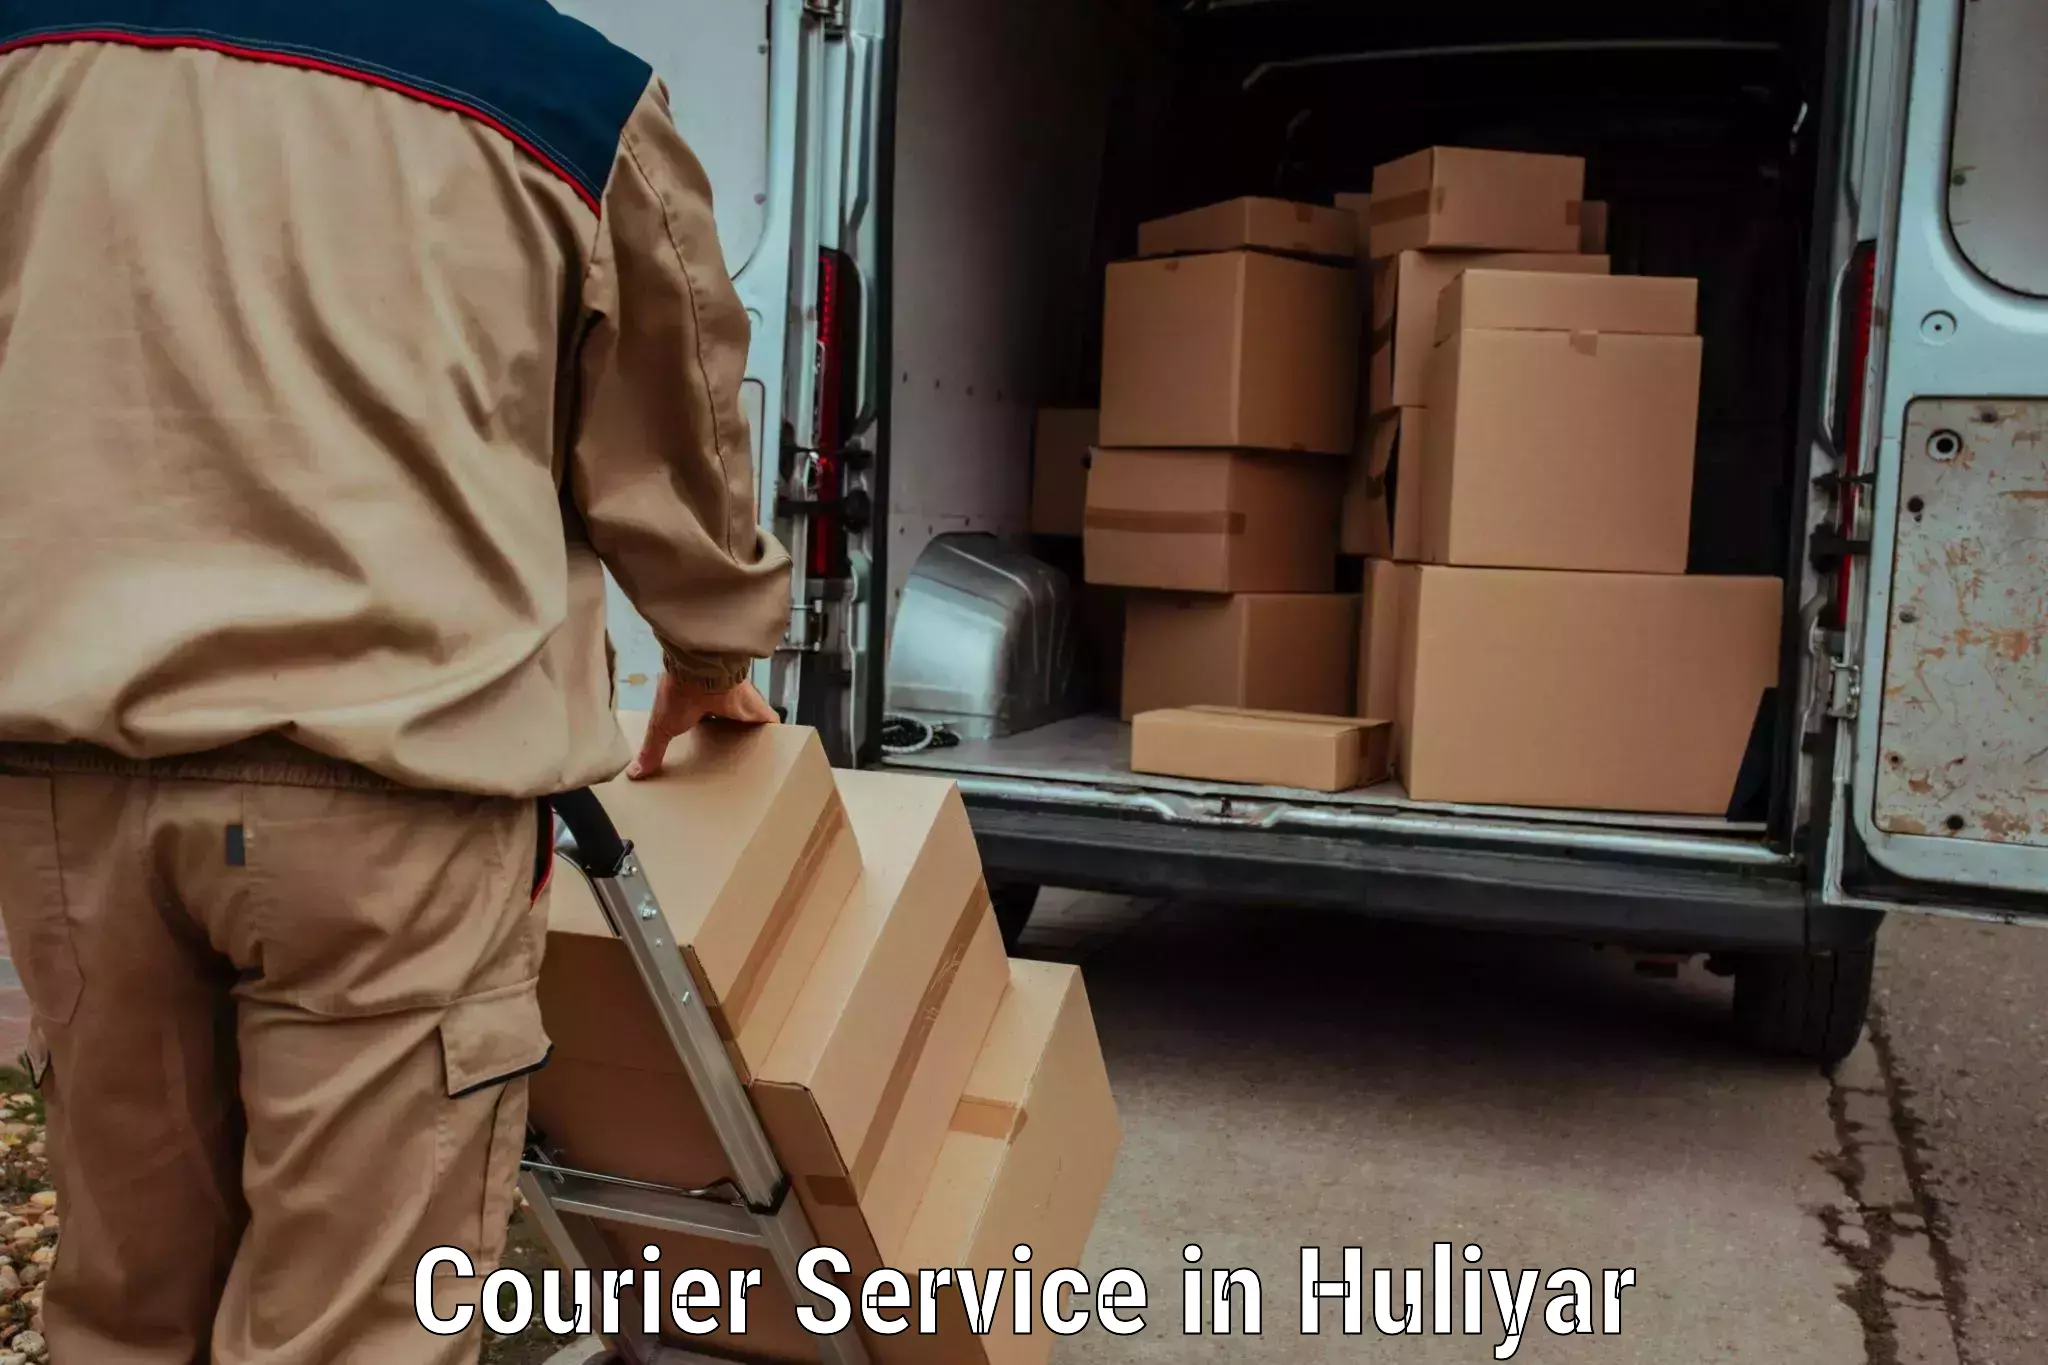 Expedited shipping methods in Huliyar